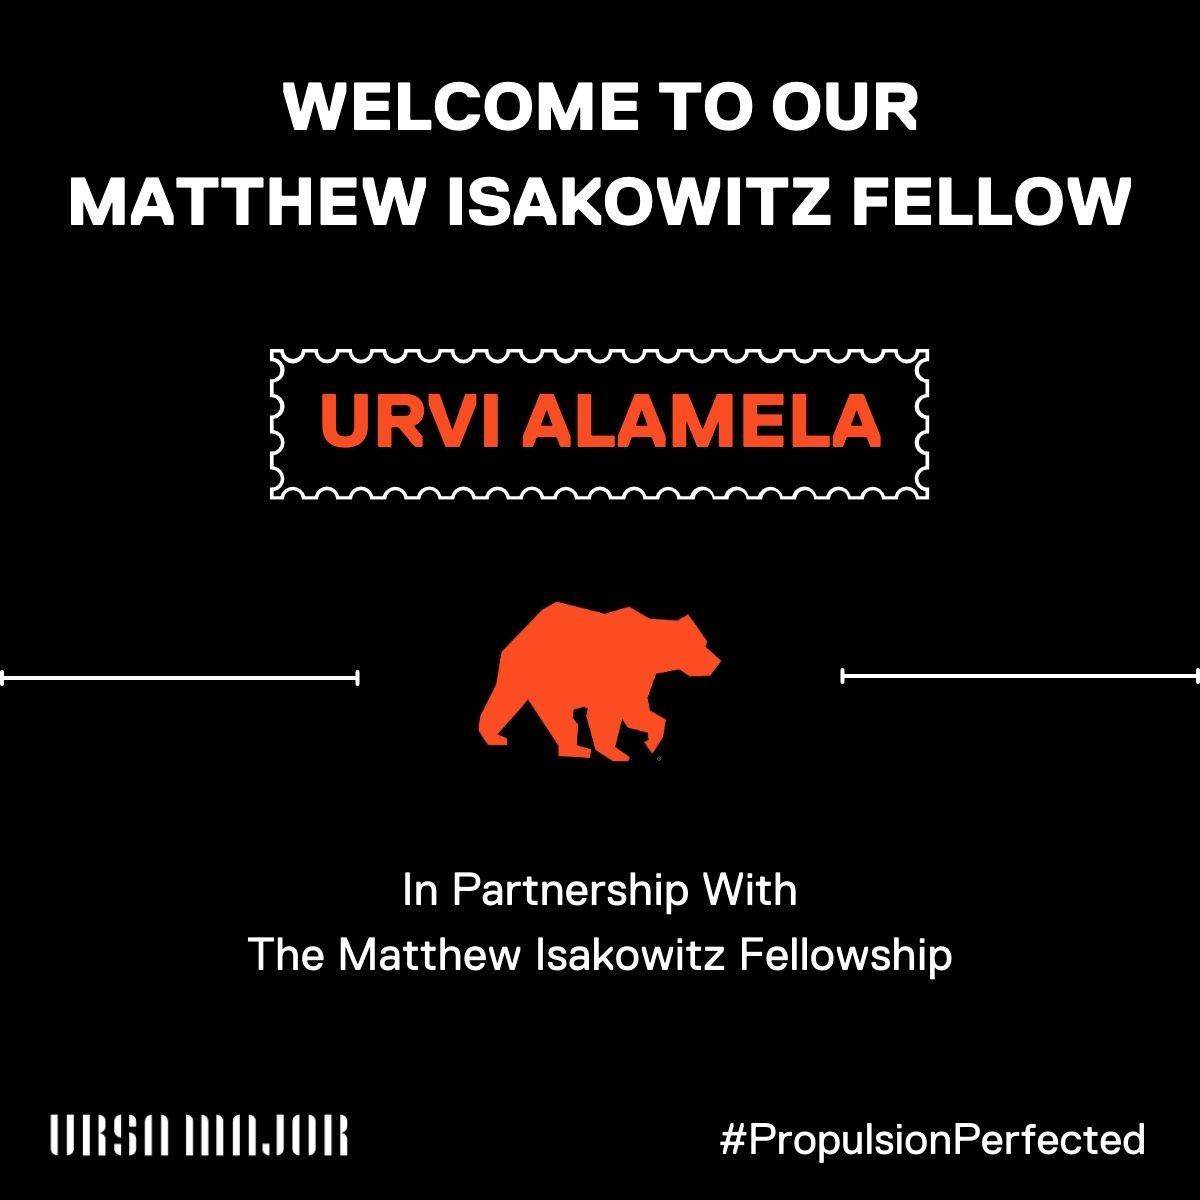 Ursa Major welcomes Matthew Isakowitz Fellow Urvi Alamela! Urvi is a senior at @UTAustin studying Aerospace Engineering with a minor in Entrepreneurship. @mattfellowship